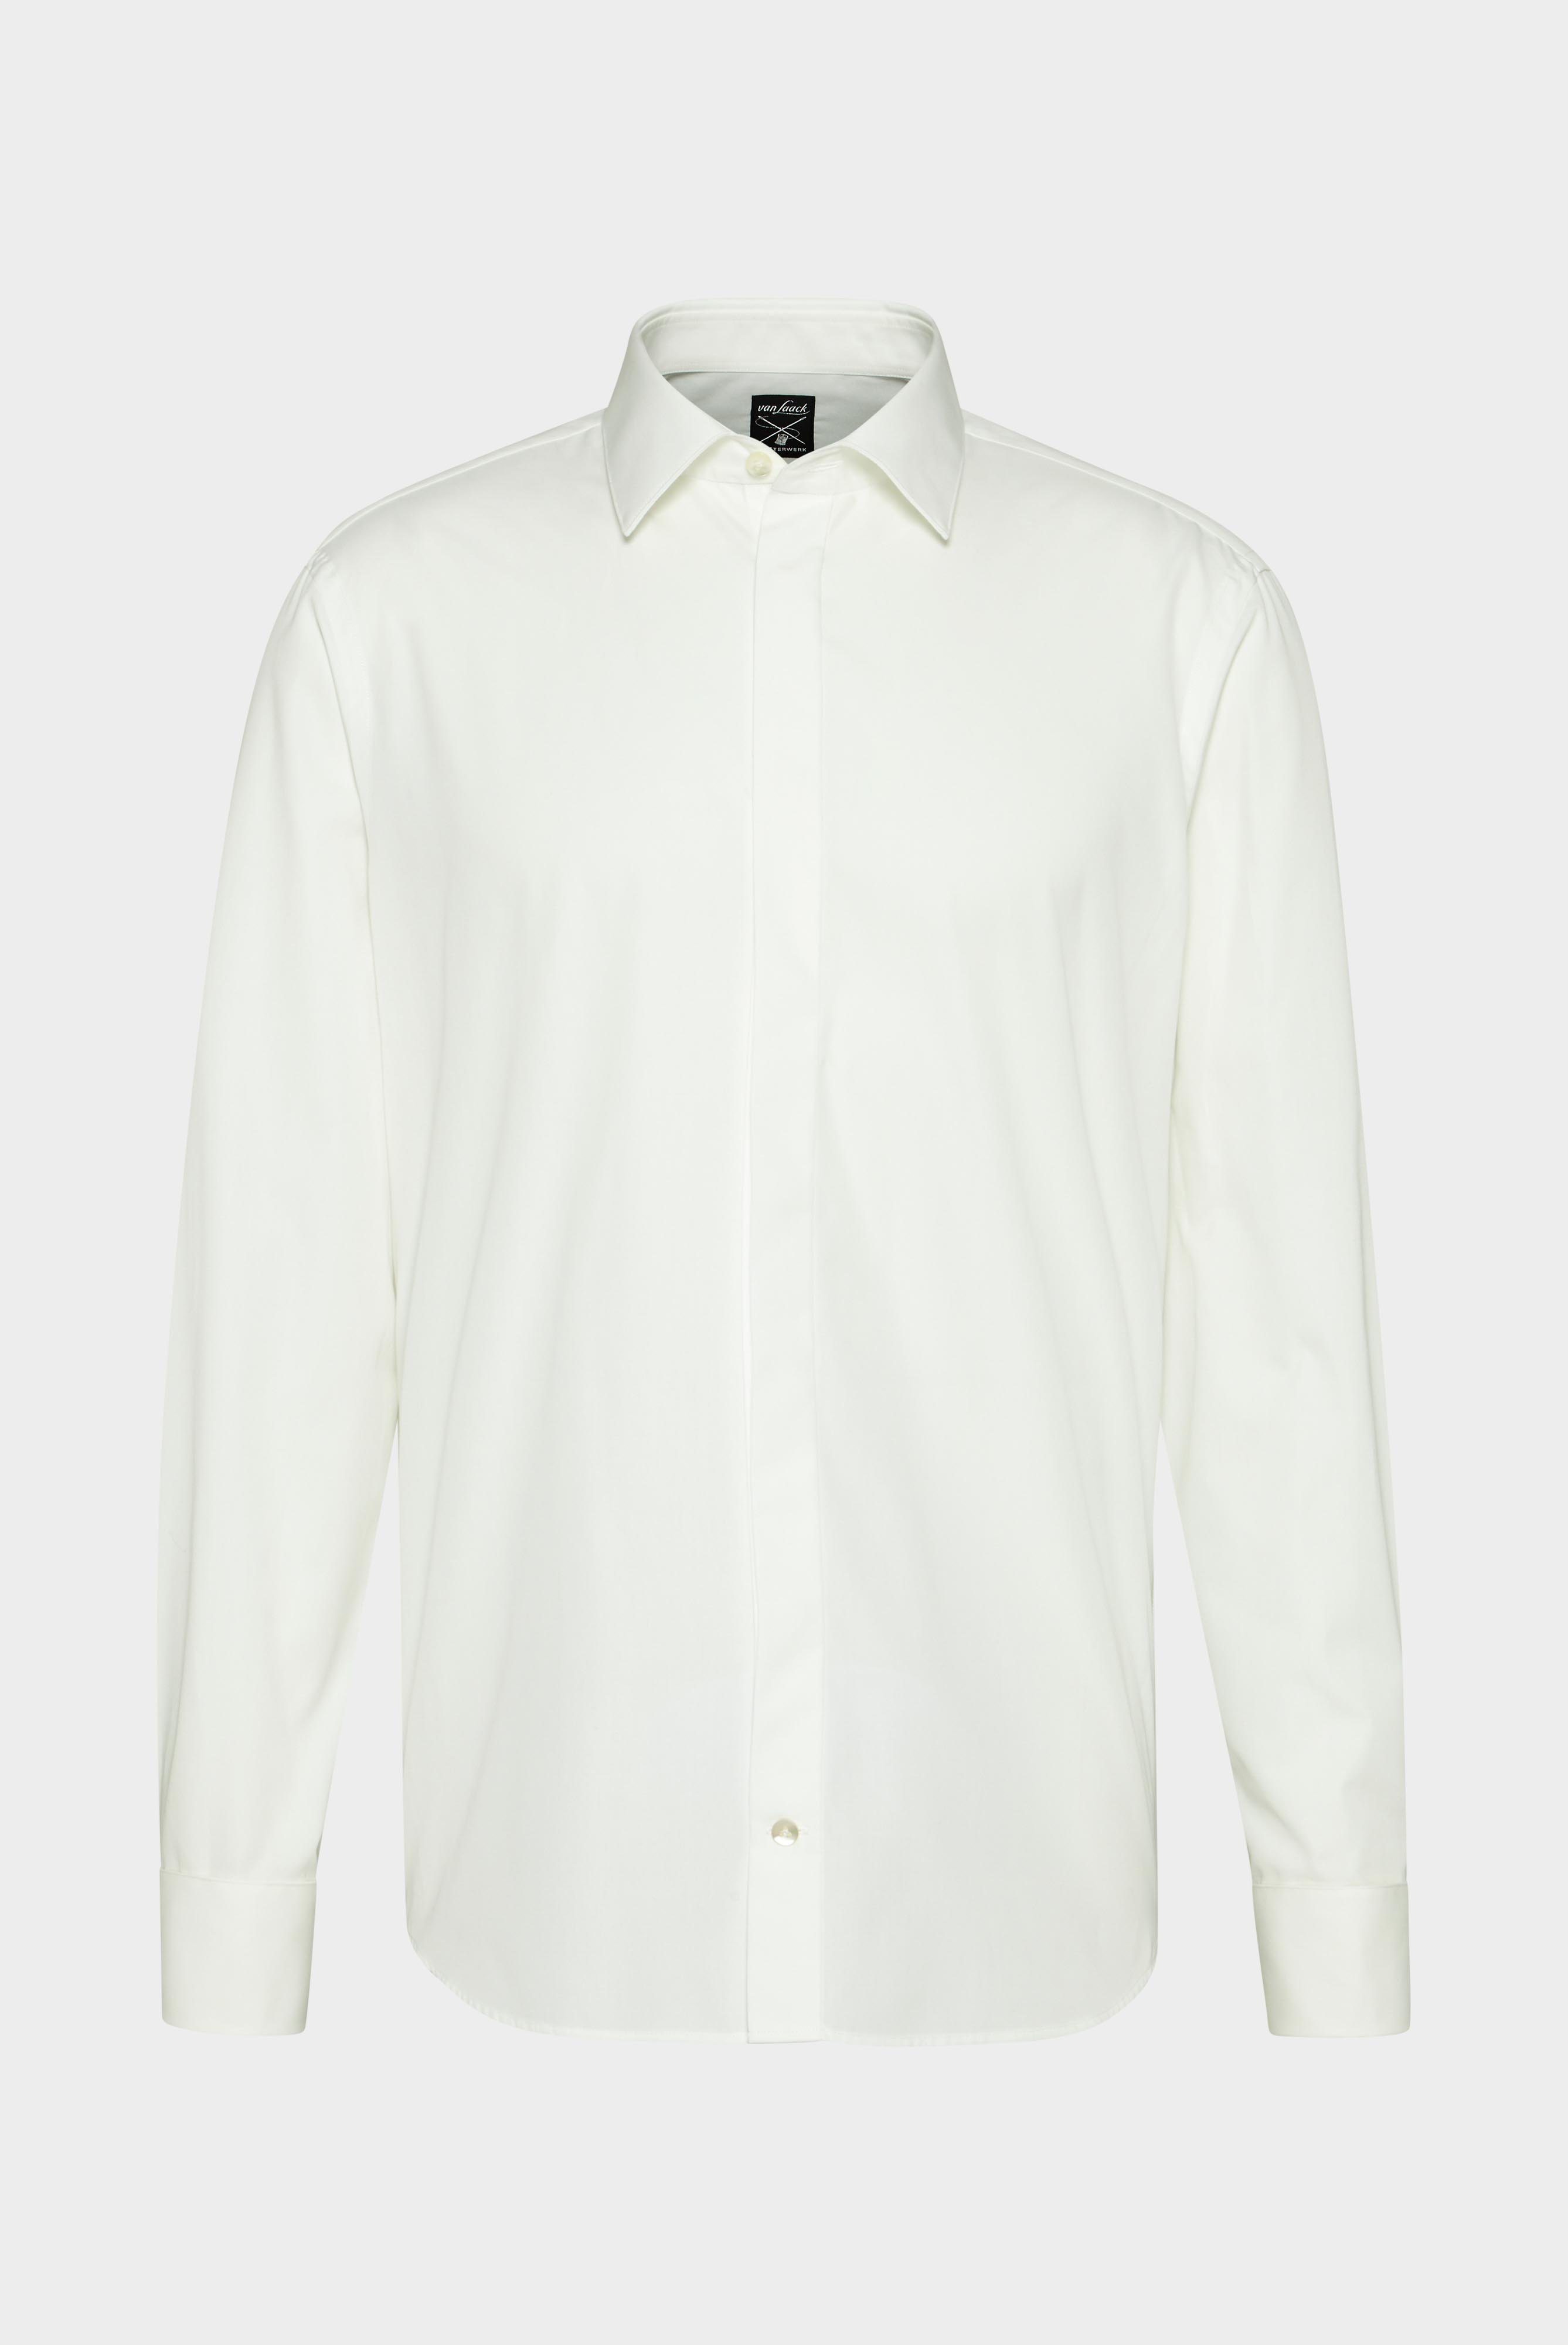 Festliche Hemden+Smokinghemd Tailor Fit+20.2062.NV.130657.100.37